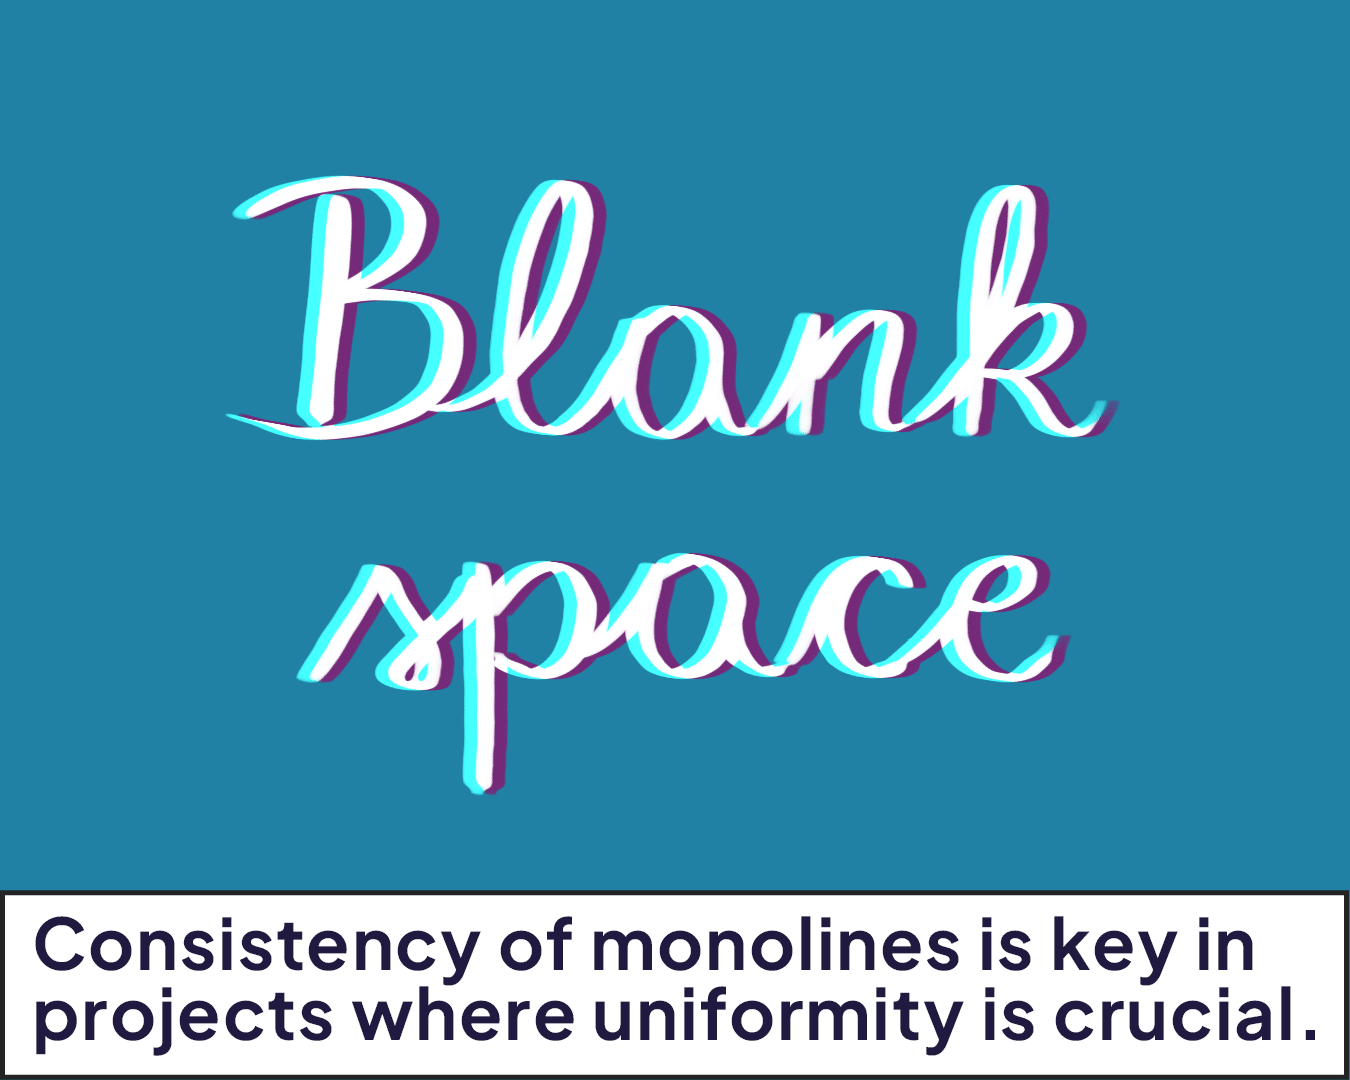 The consistency of monolines